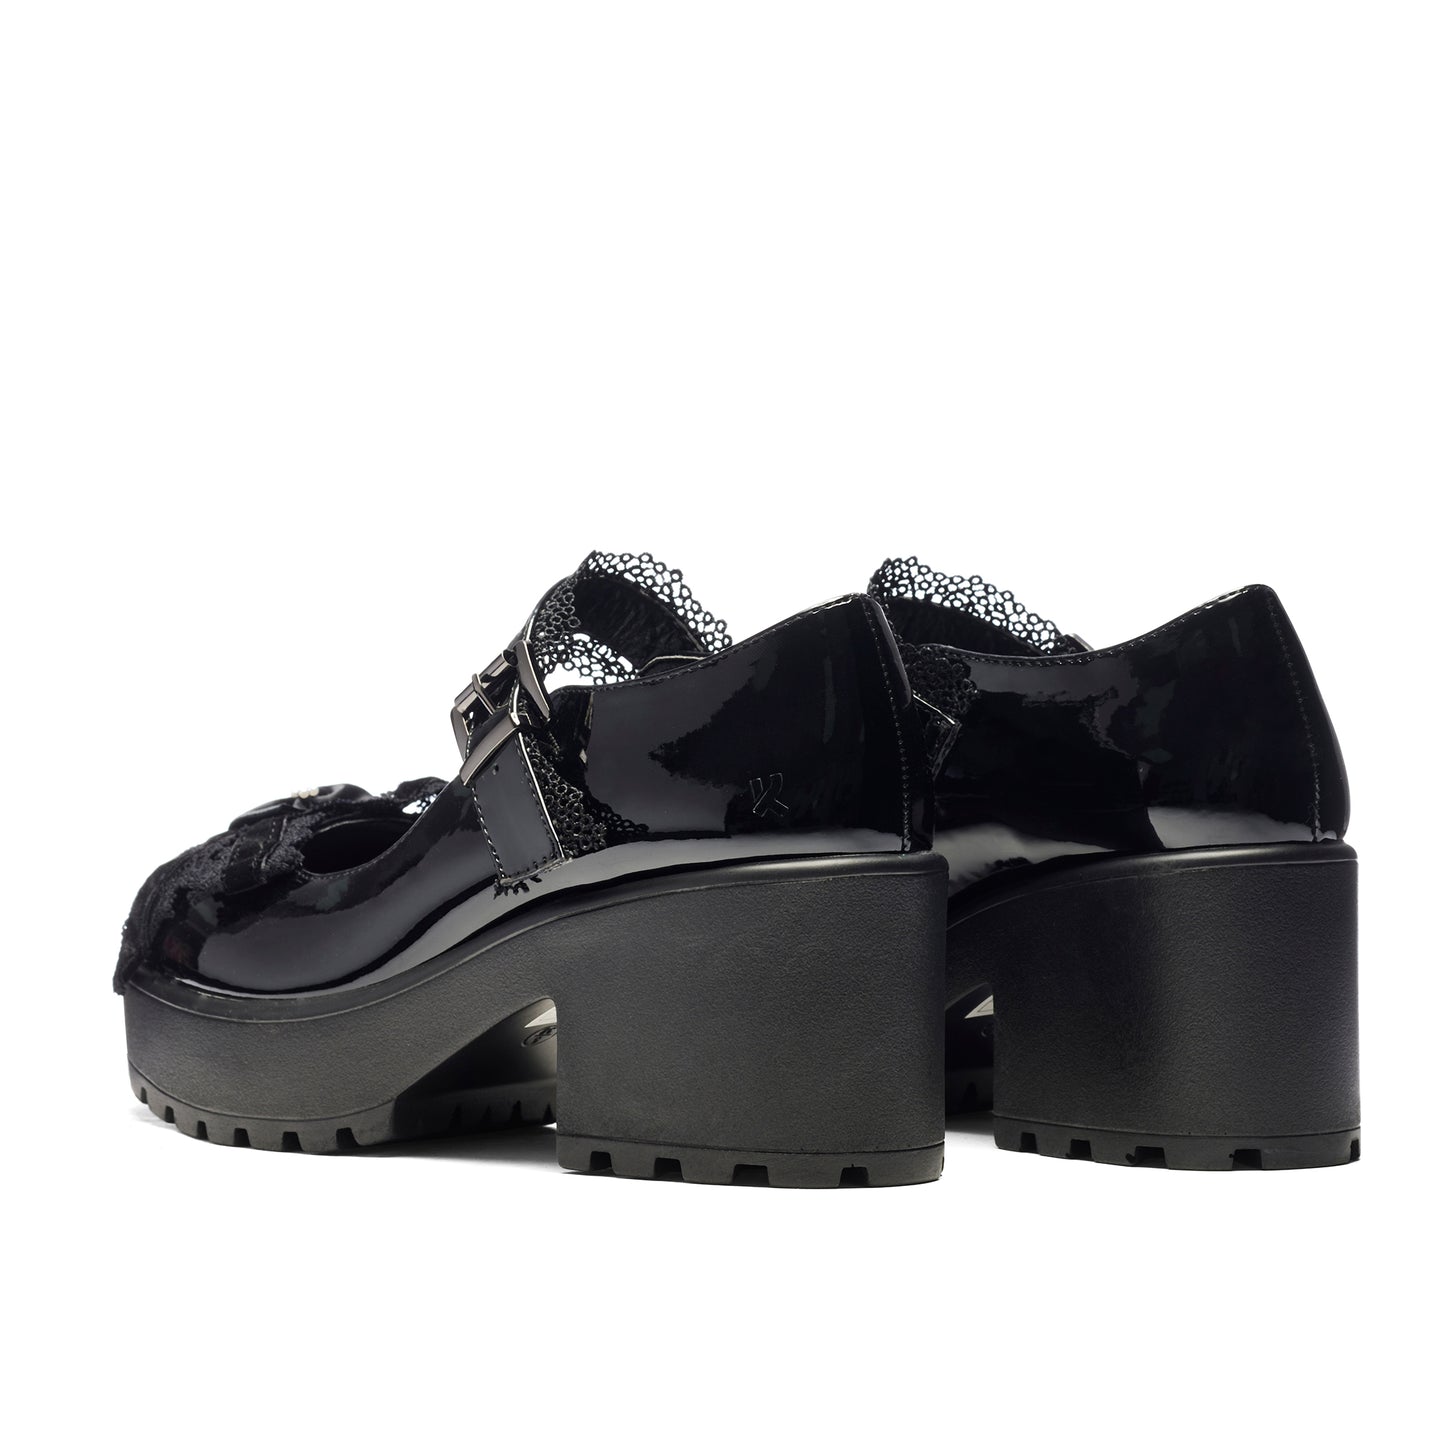 Tira May Jane Shoes 'Cute Gloom Edition' - Black - Koi Footwear - Back View